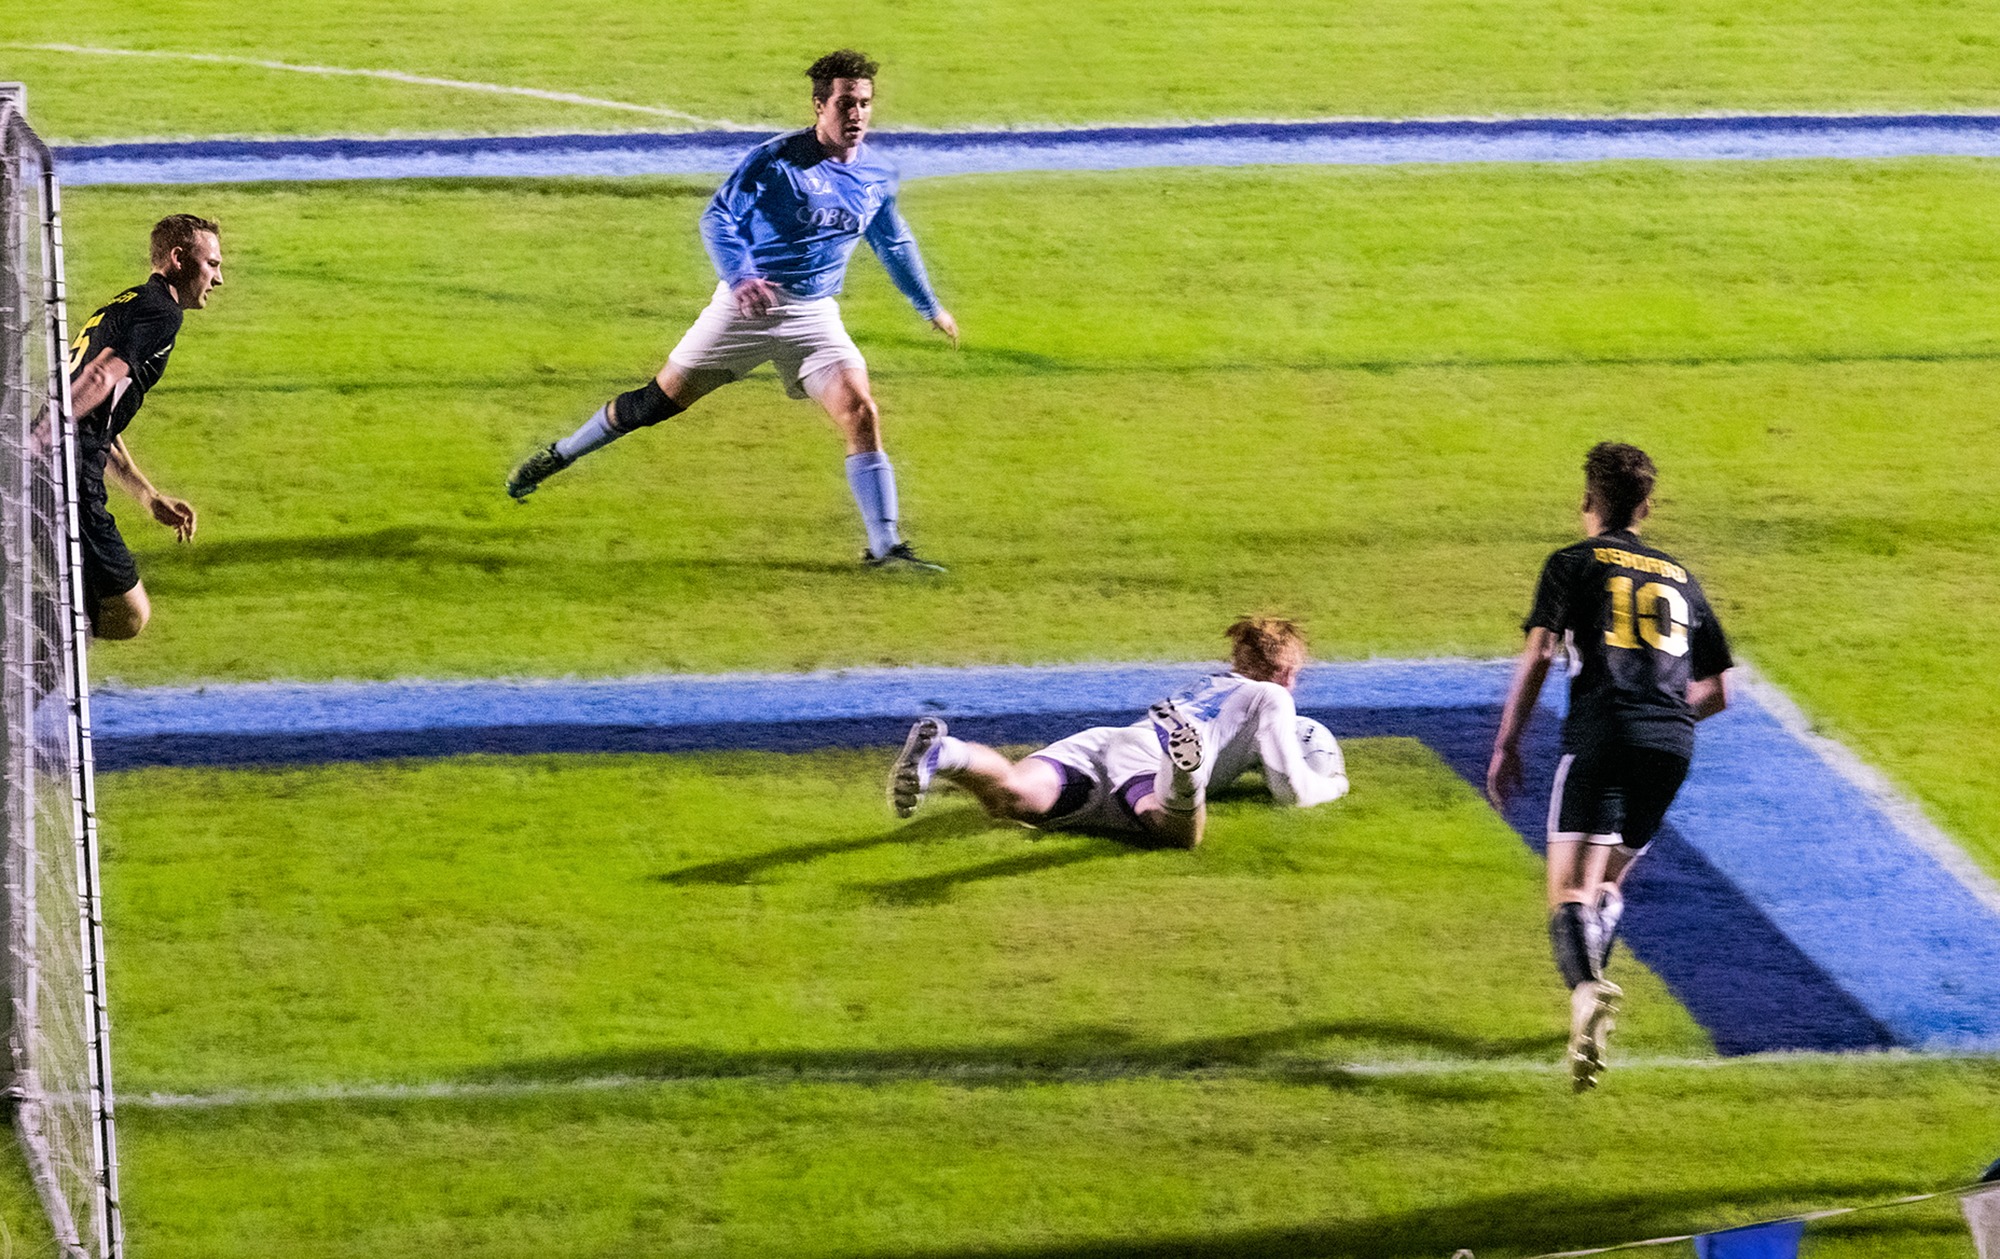 Cobras collegian's goalie holding soccer ball on the ground in front of the goal. 